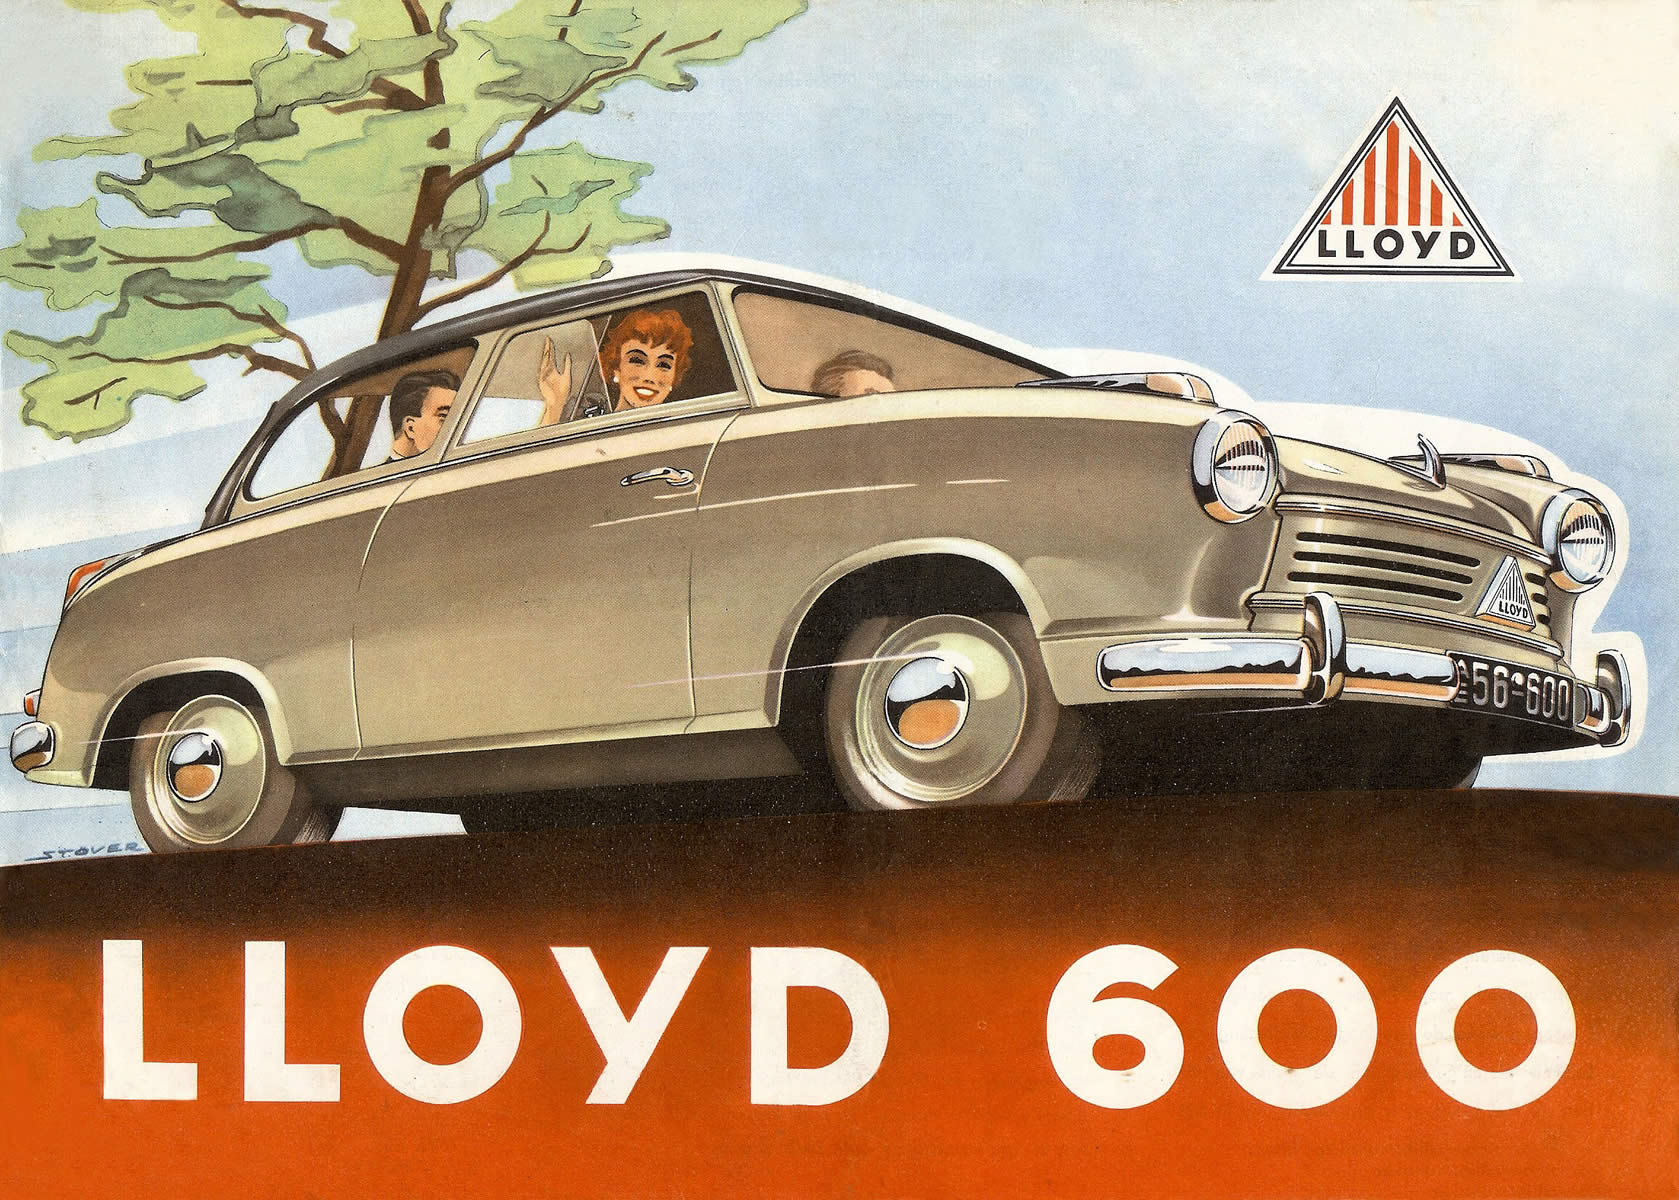 Lloyd 600 brochure cover 1955